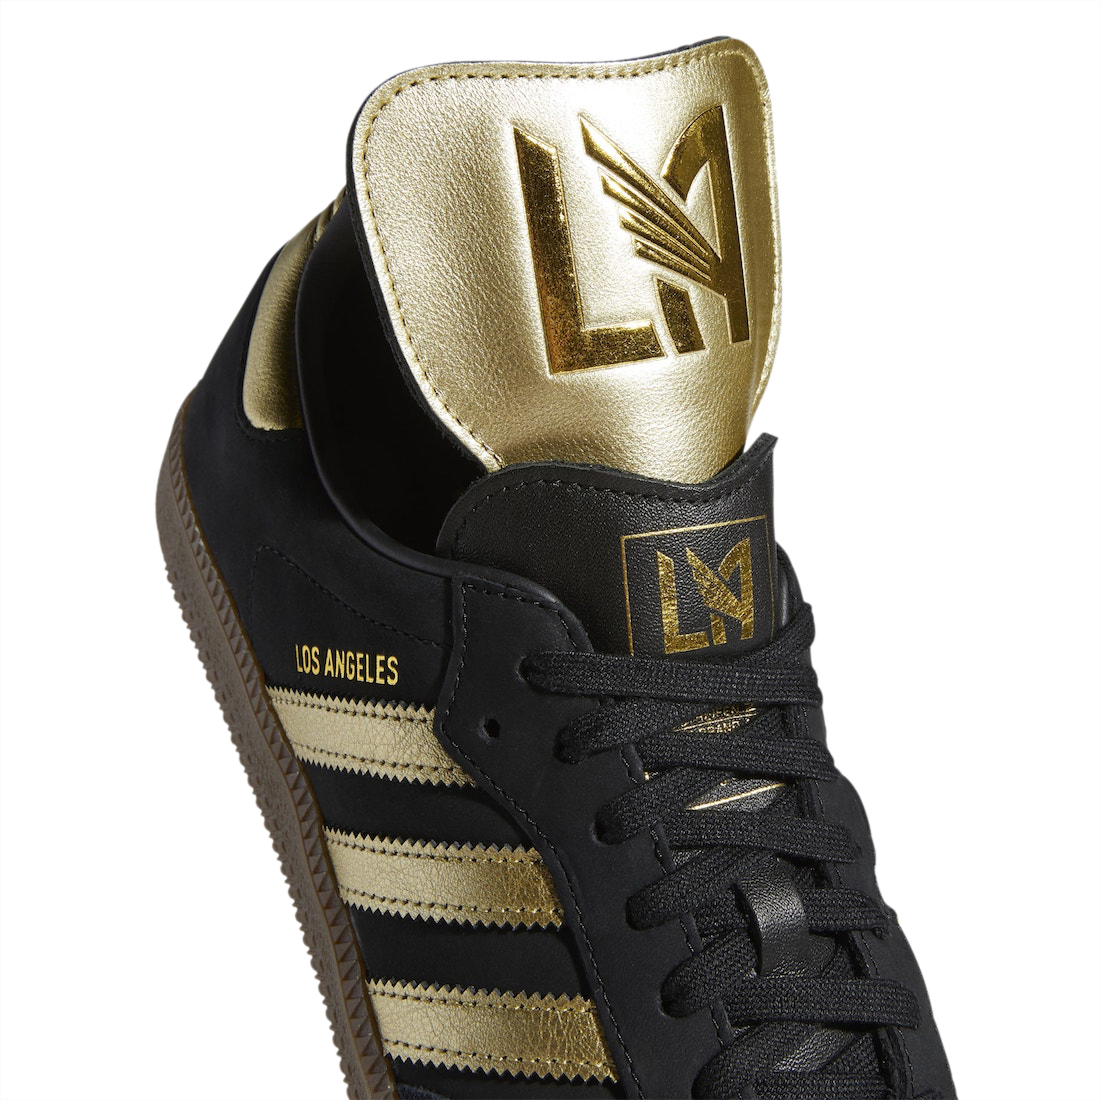 BUY Adidas Samba LAFC Black Gold | Kixify Marketplace